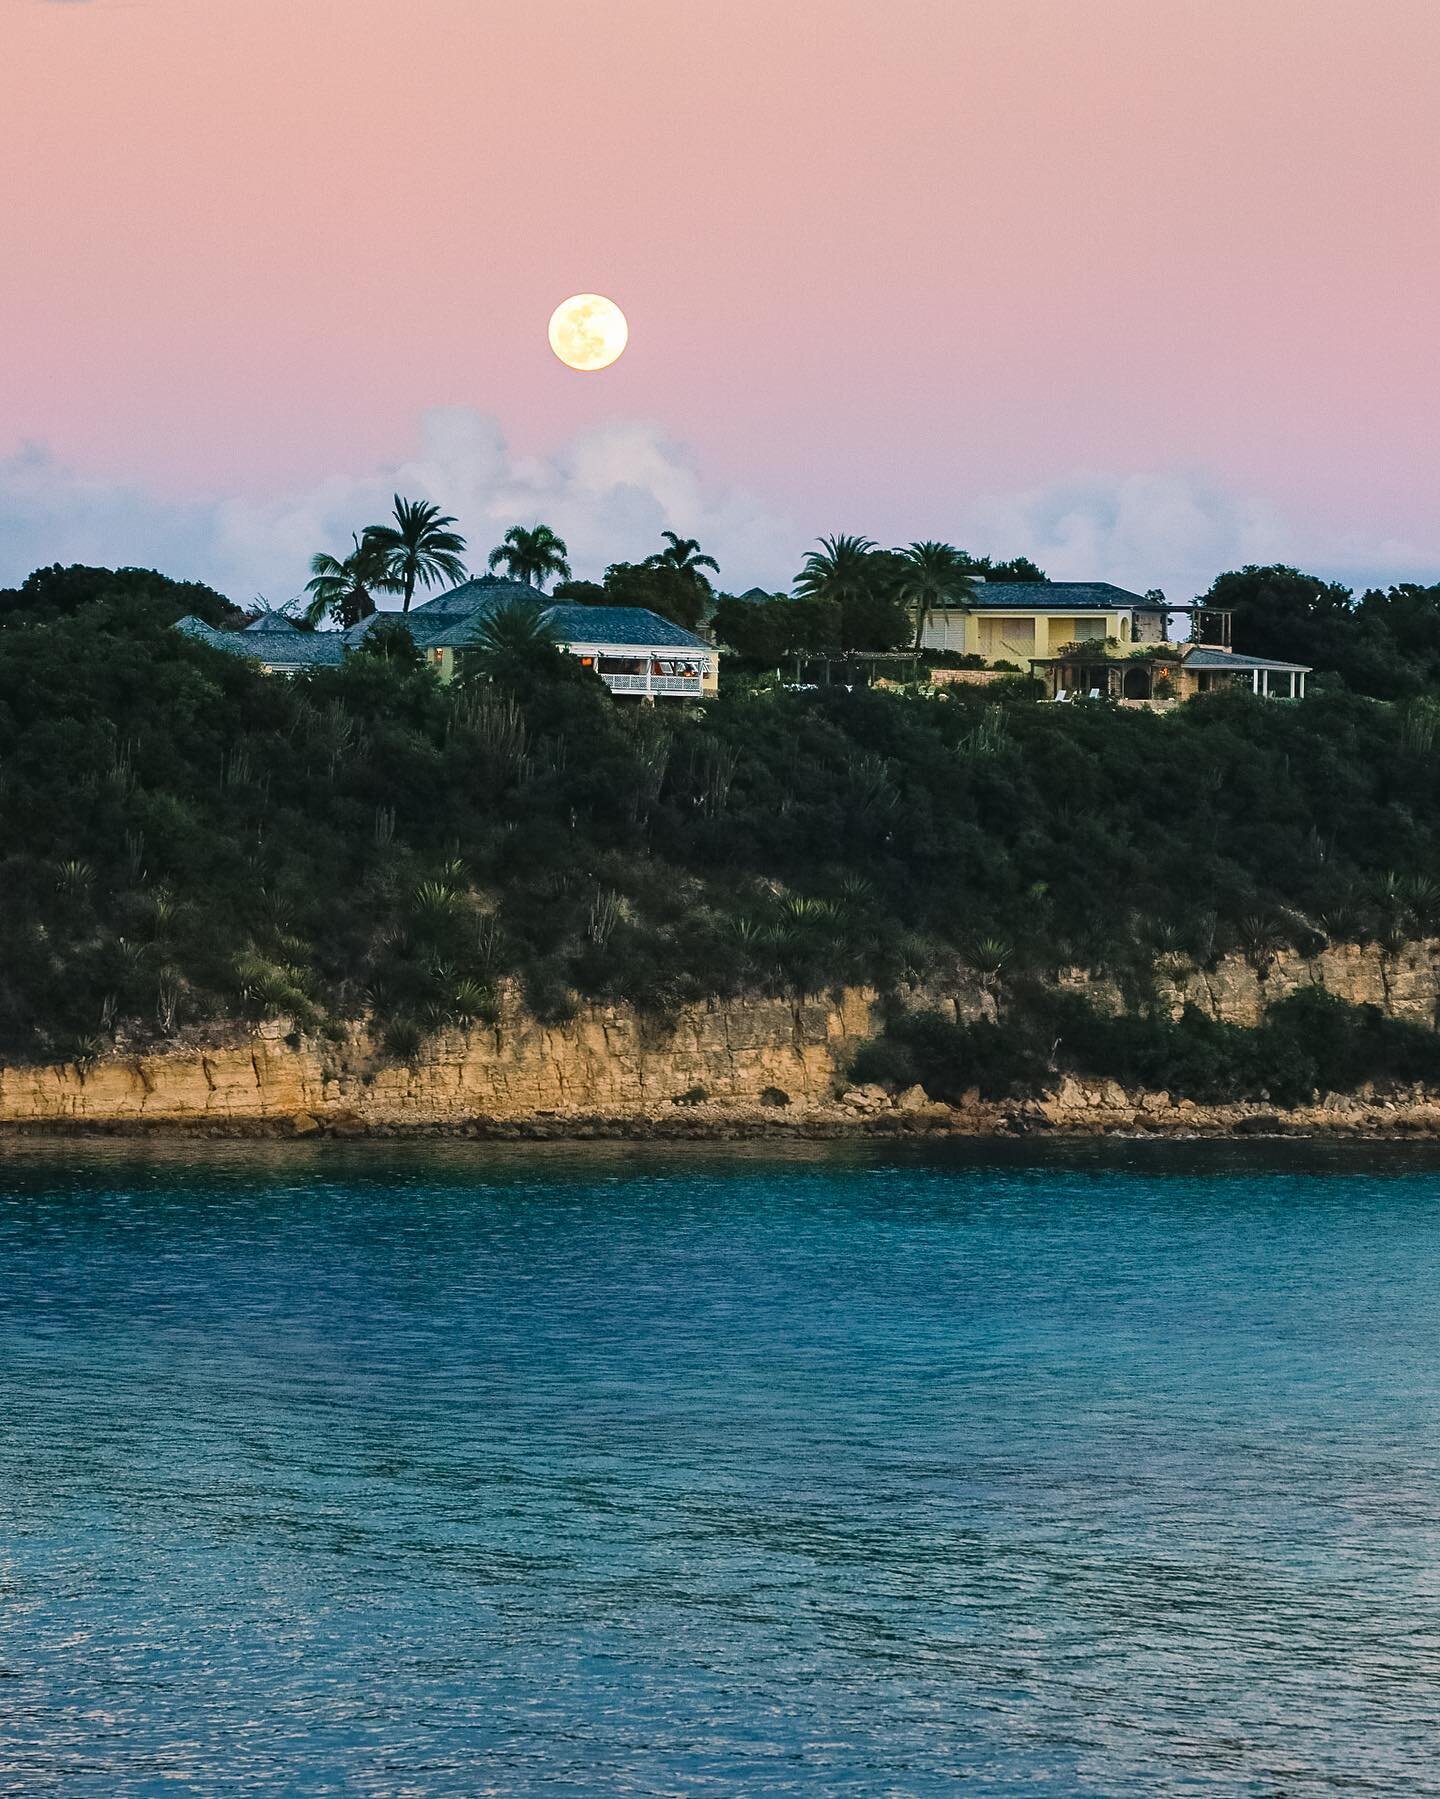 Wolf Moon shining over Antigua at Sunset last night 🌚🐺